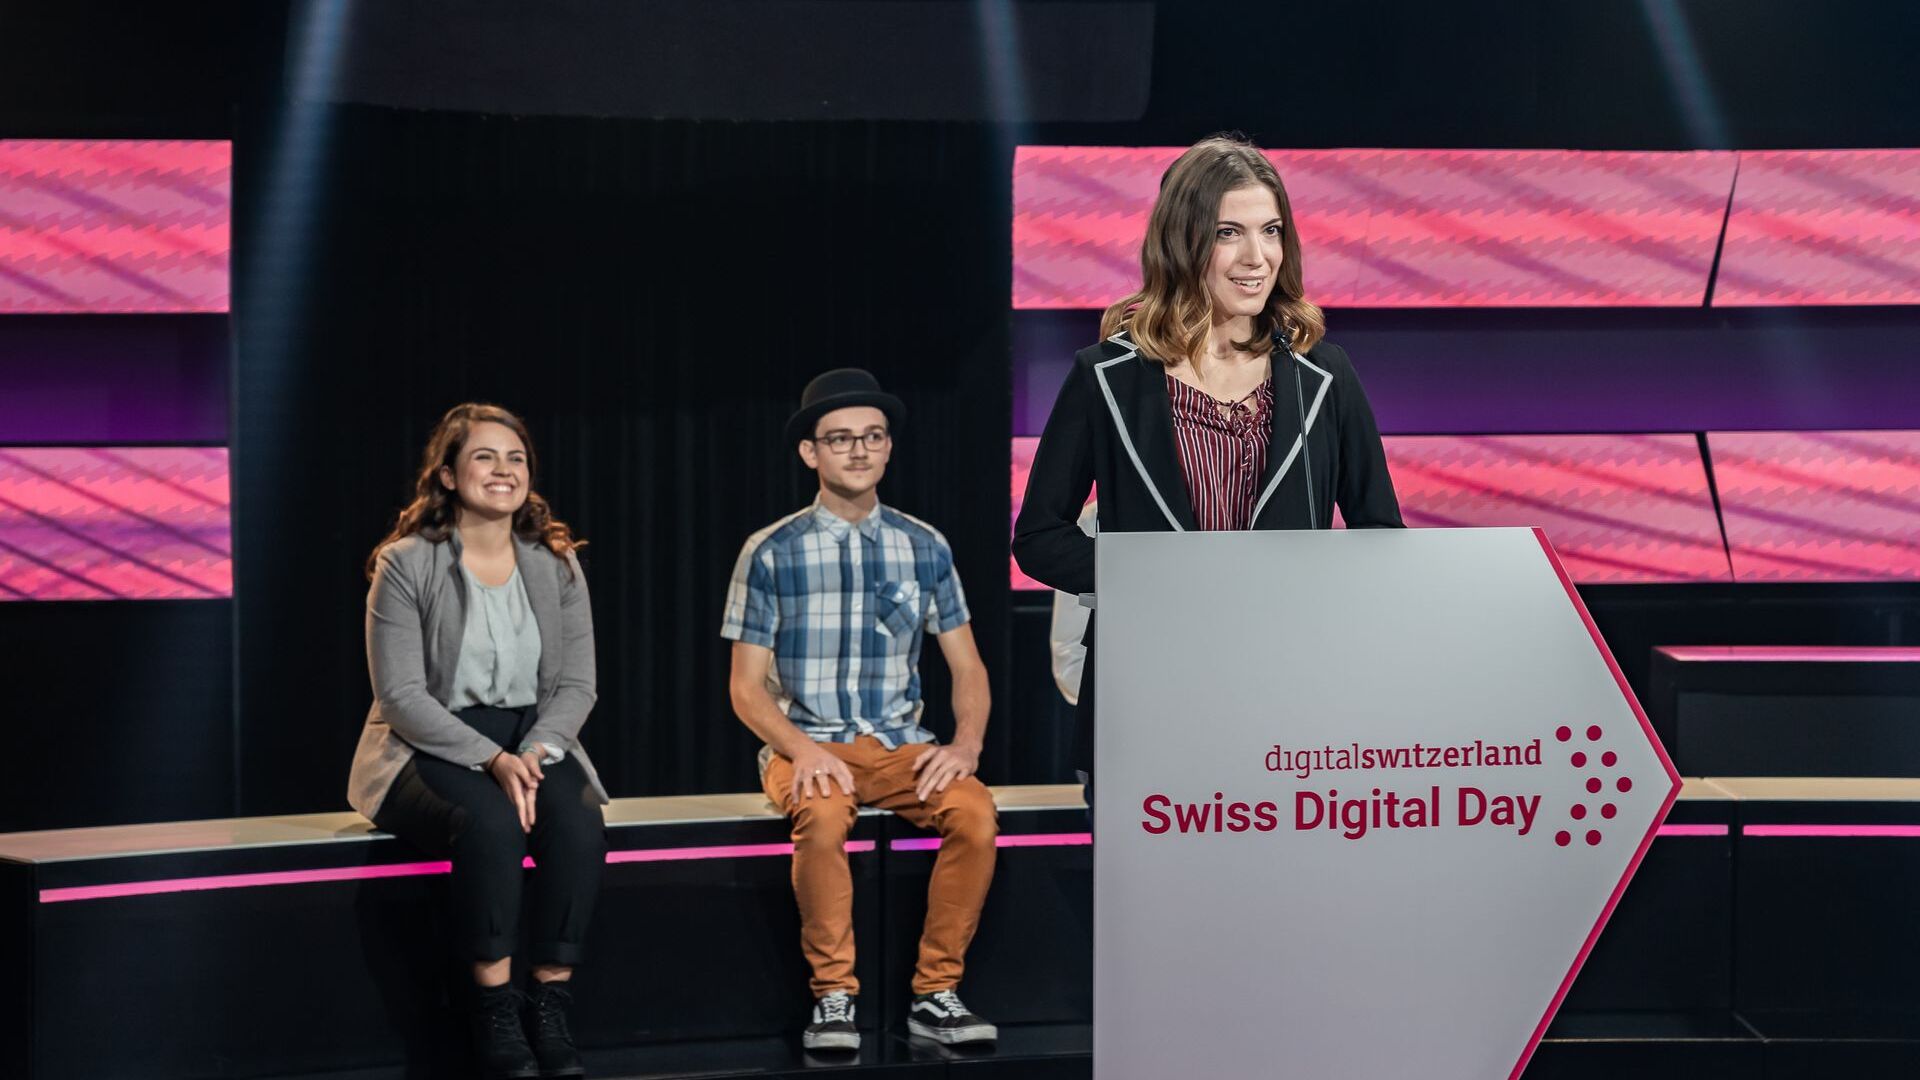 Alessandra Capurro a été finaliste du classement "NextGen Hero" au "Digital Economy Award" 2021